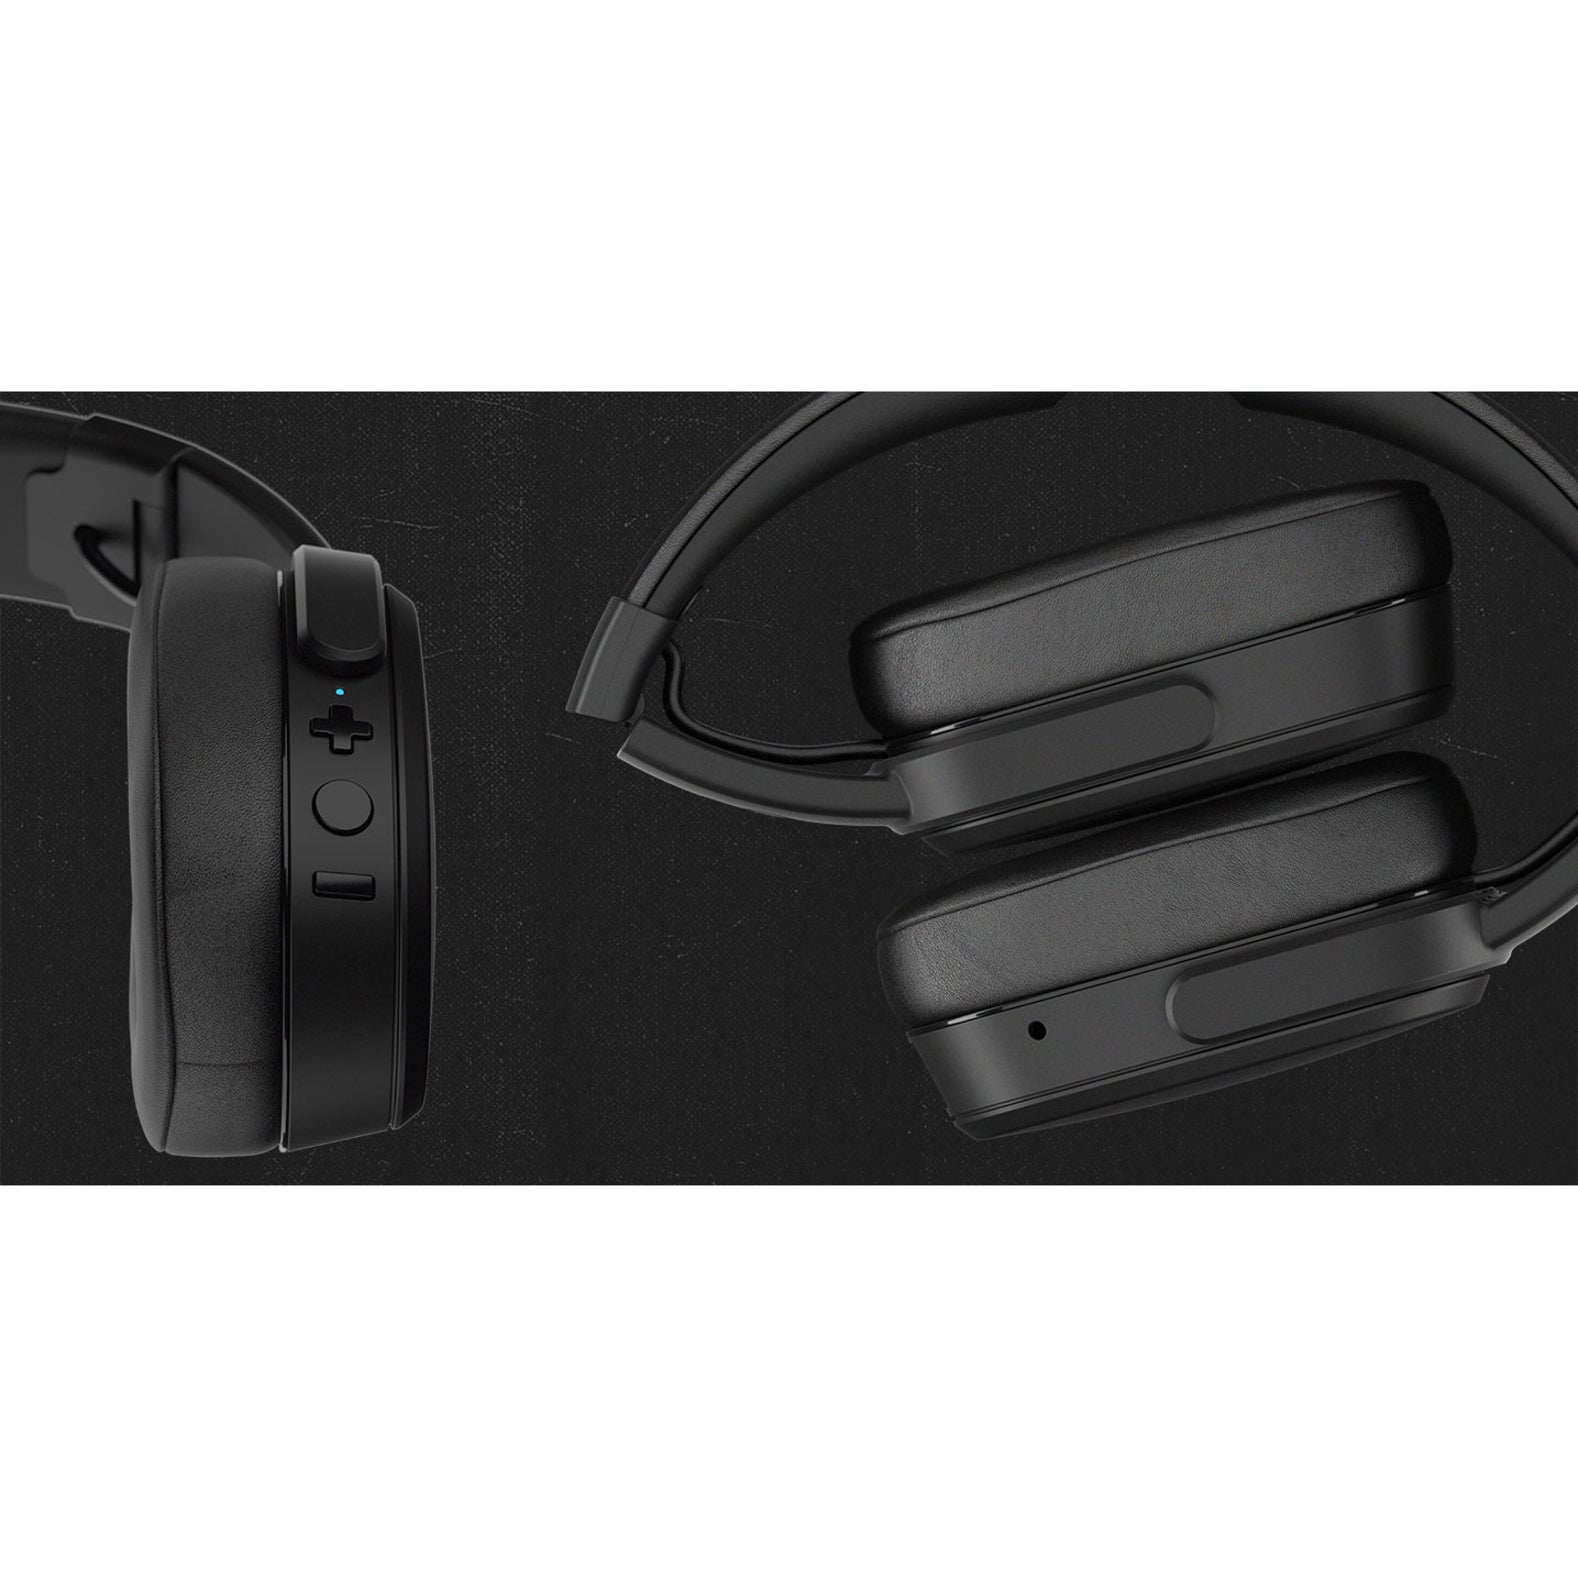 Skullcandy Crusher Wireless Headphone - Powerful Bass, Bluetooth, Over-the-head [Discontinued]